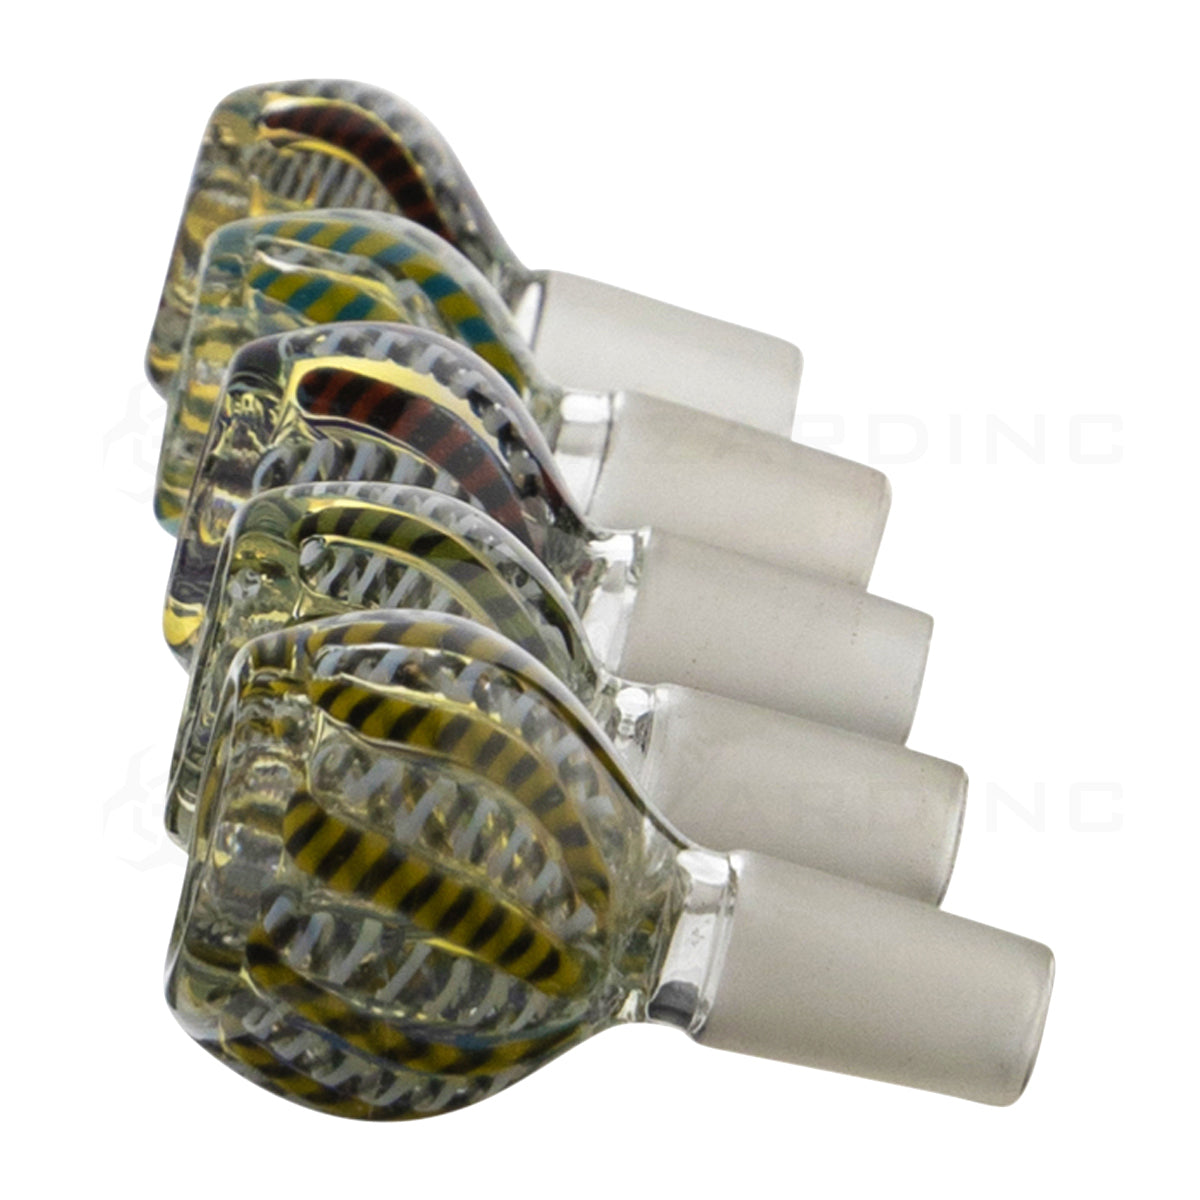 Bowl | Zigzag Striped Lattichino Glass Bowls | 14mm - Mix Colors - 5 Count Glass Bowl Biohazard Inc   